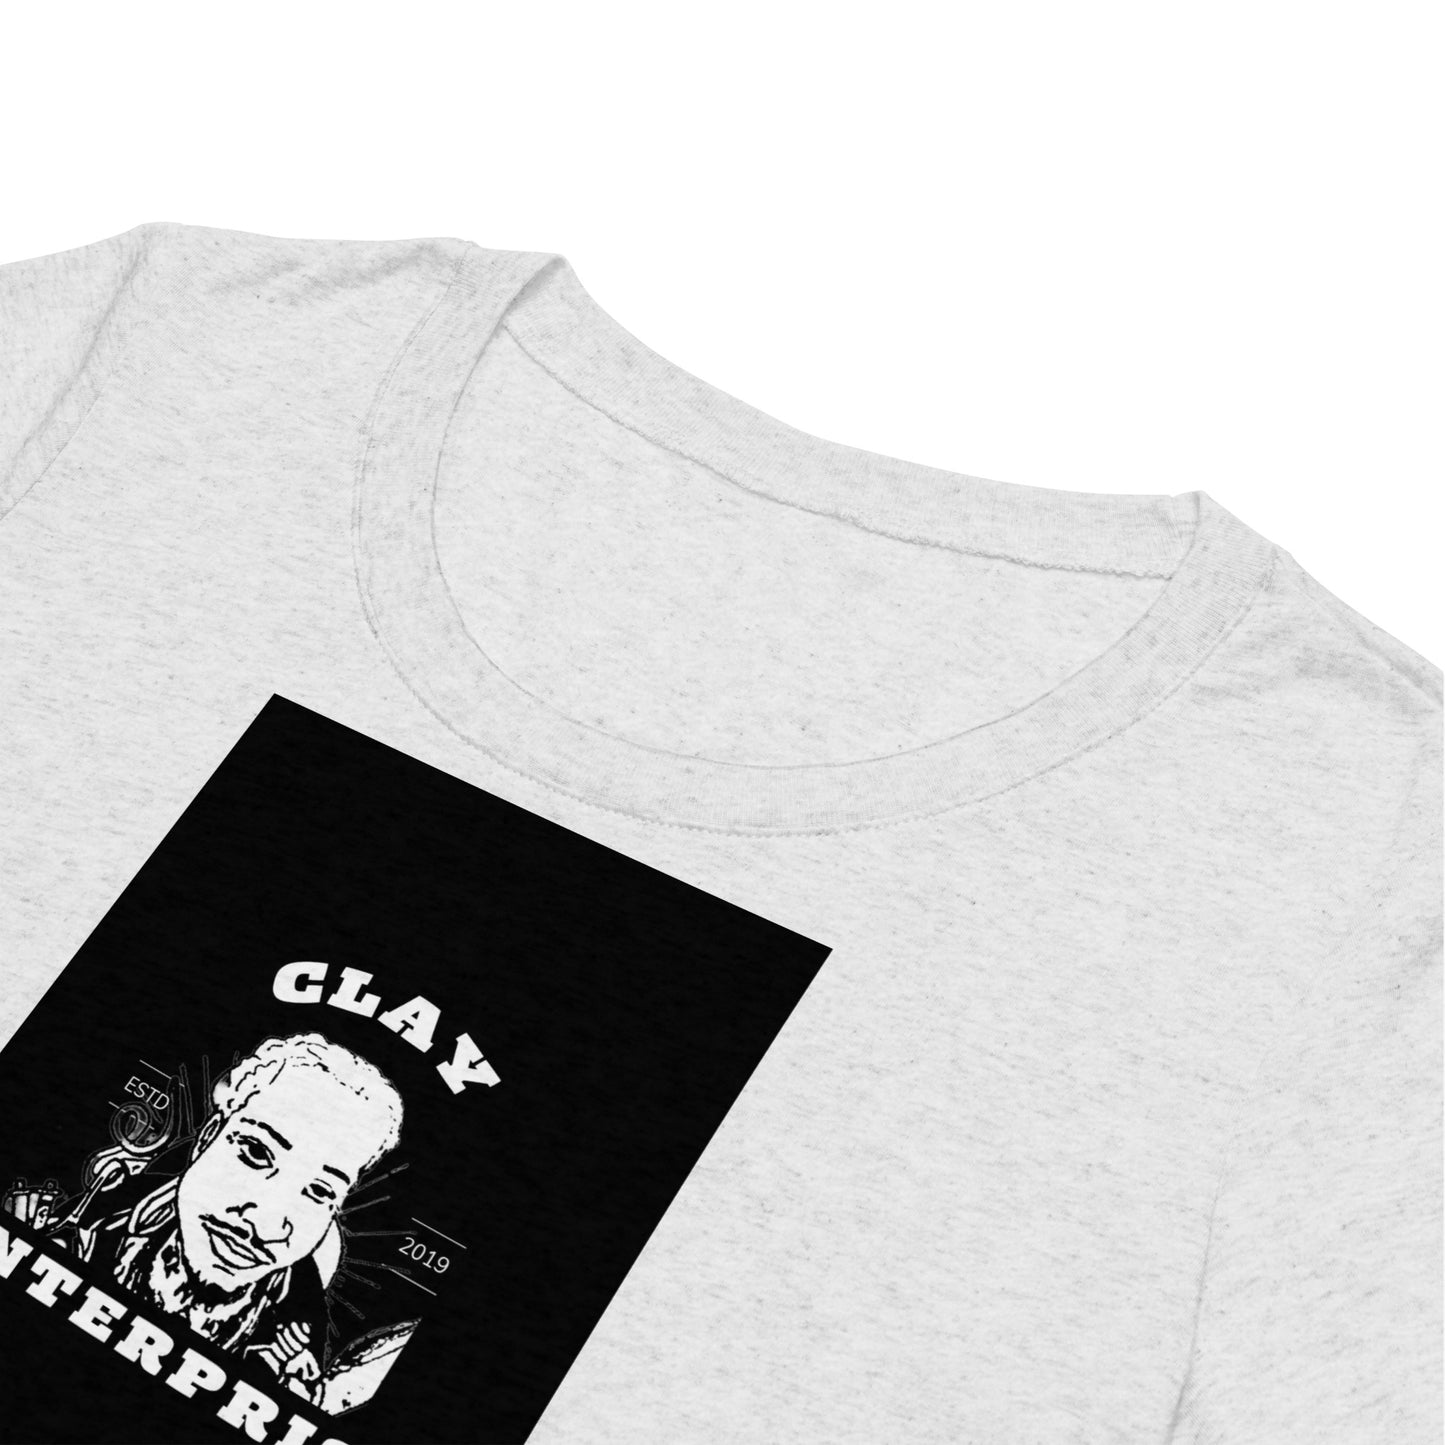 "CLAY Enterprise brand/logo x Terence Clay signature" Women's Short Sleeve Shirt